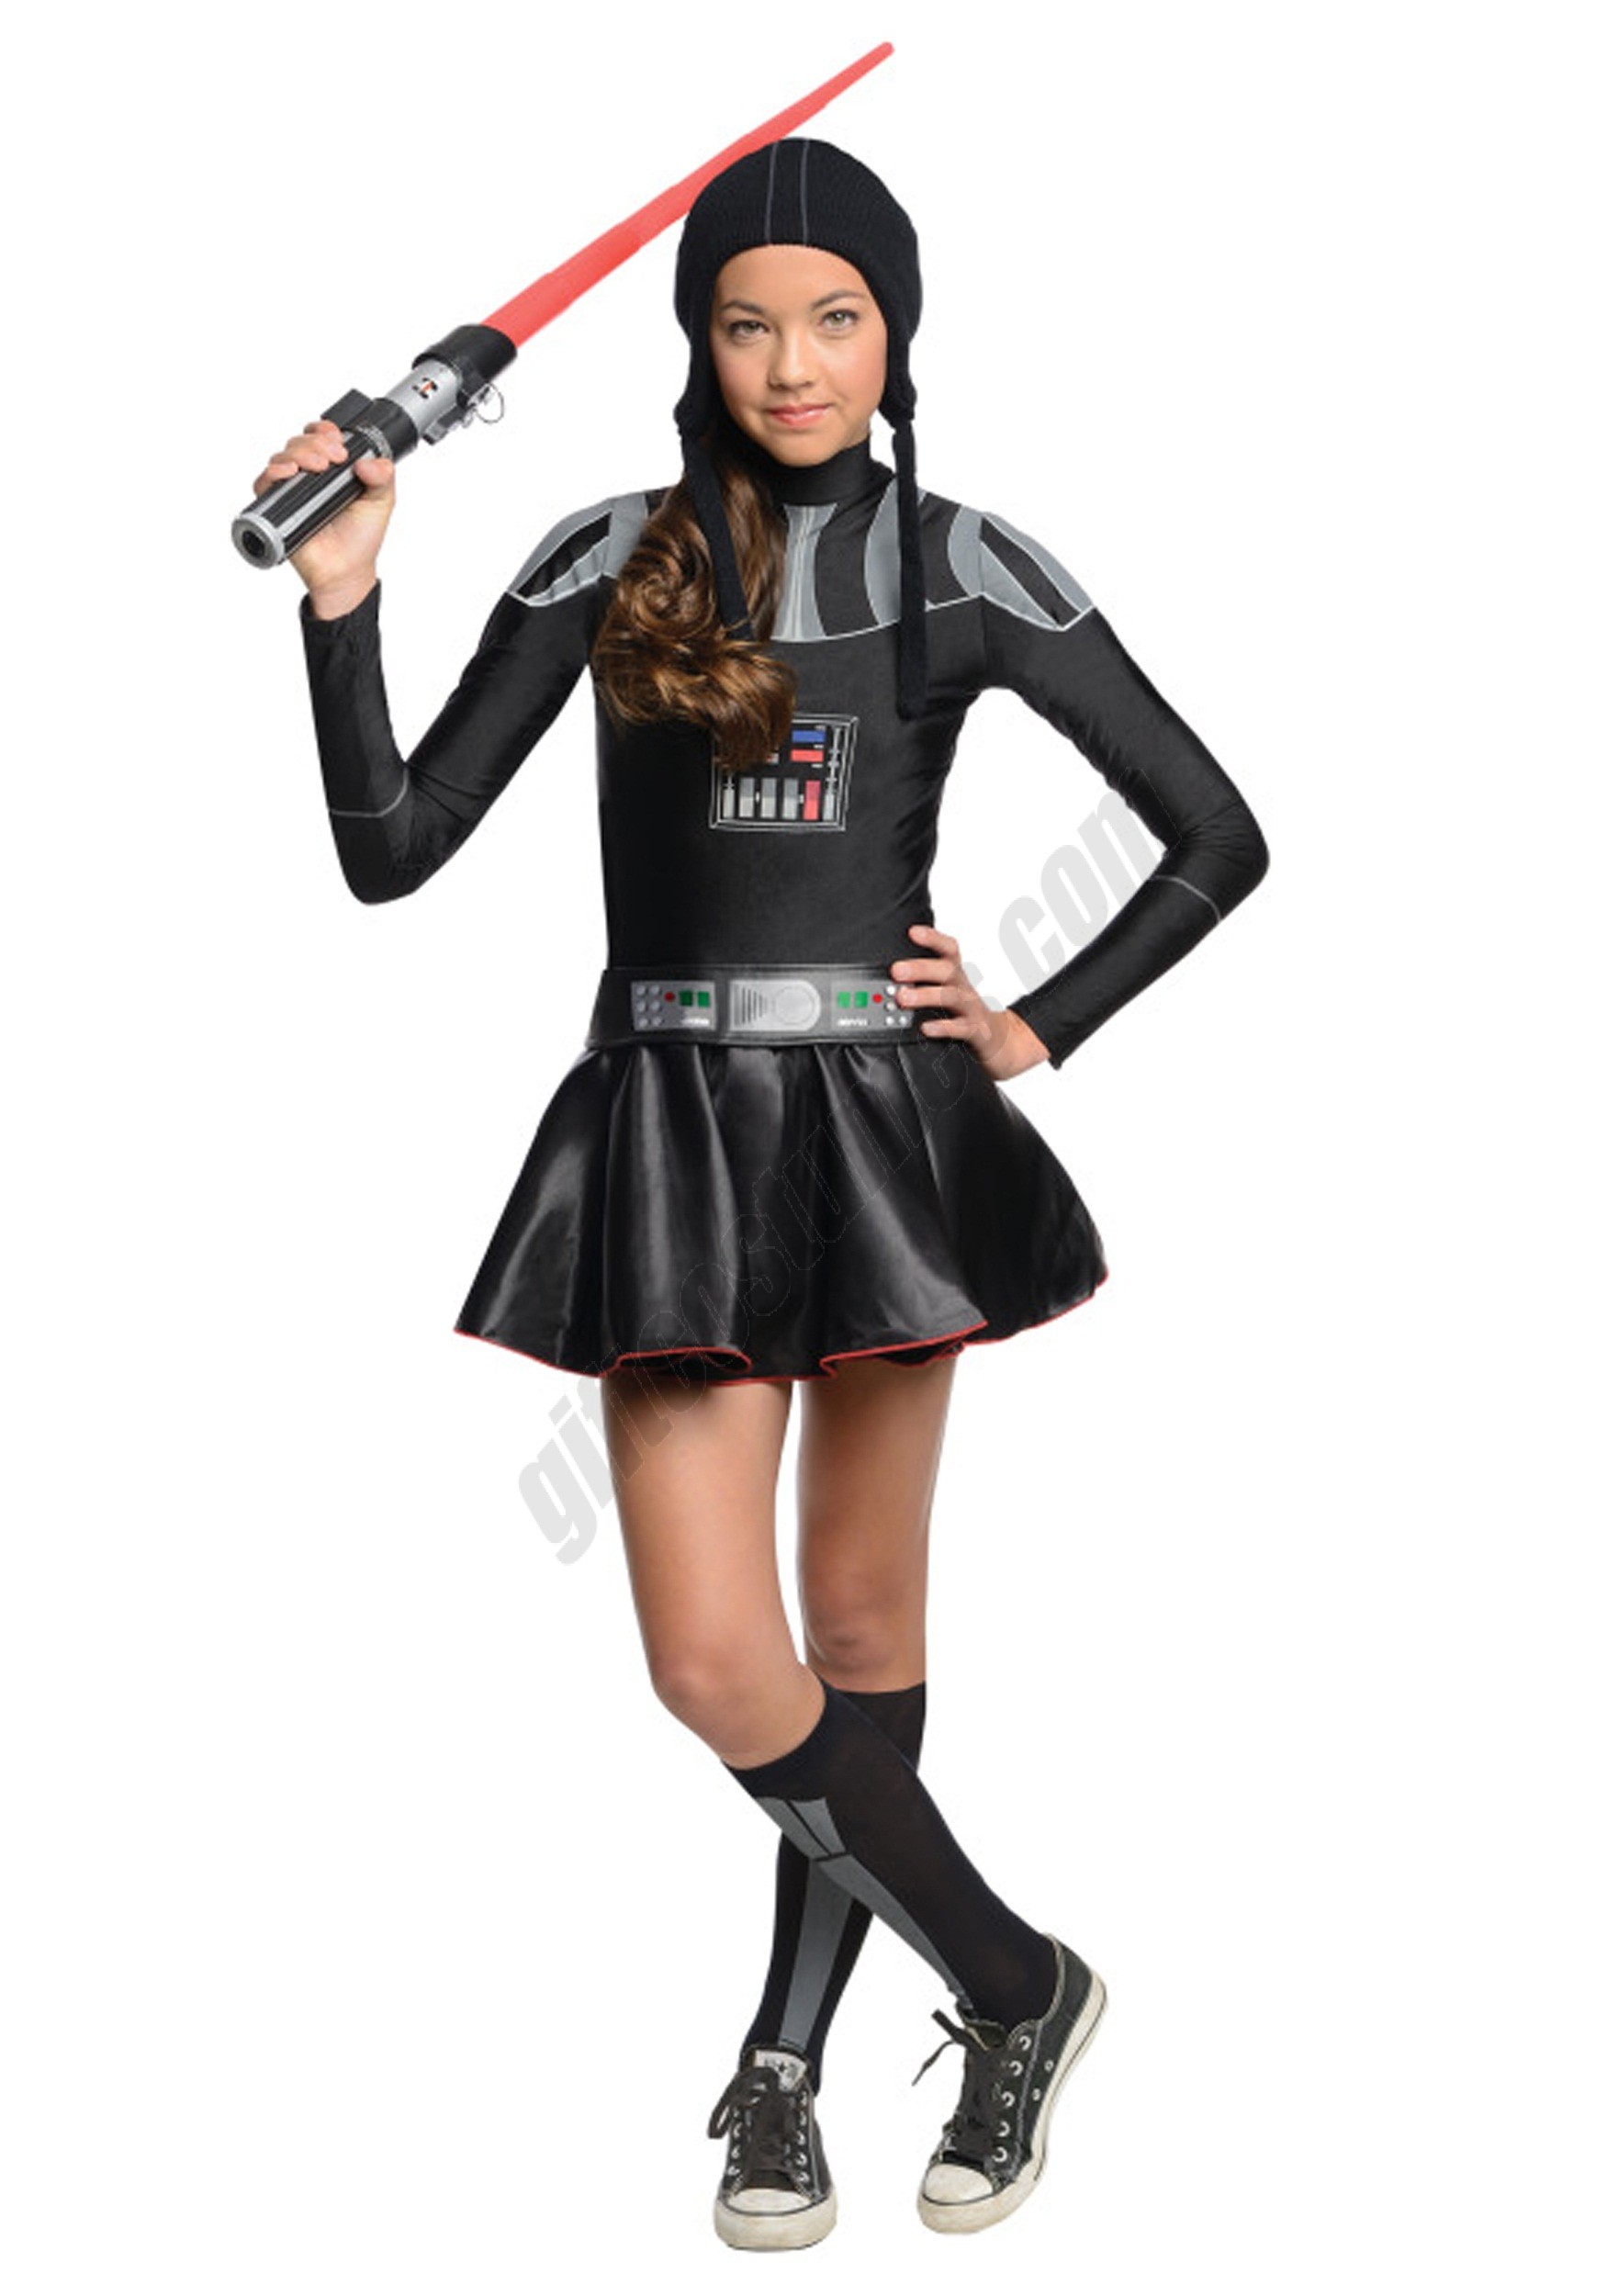 Darth Vader Tween Dress Costume Promotions - Darth Vader Tween Dress Costume Promotions